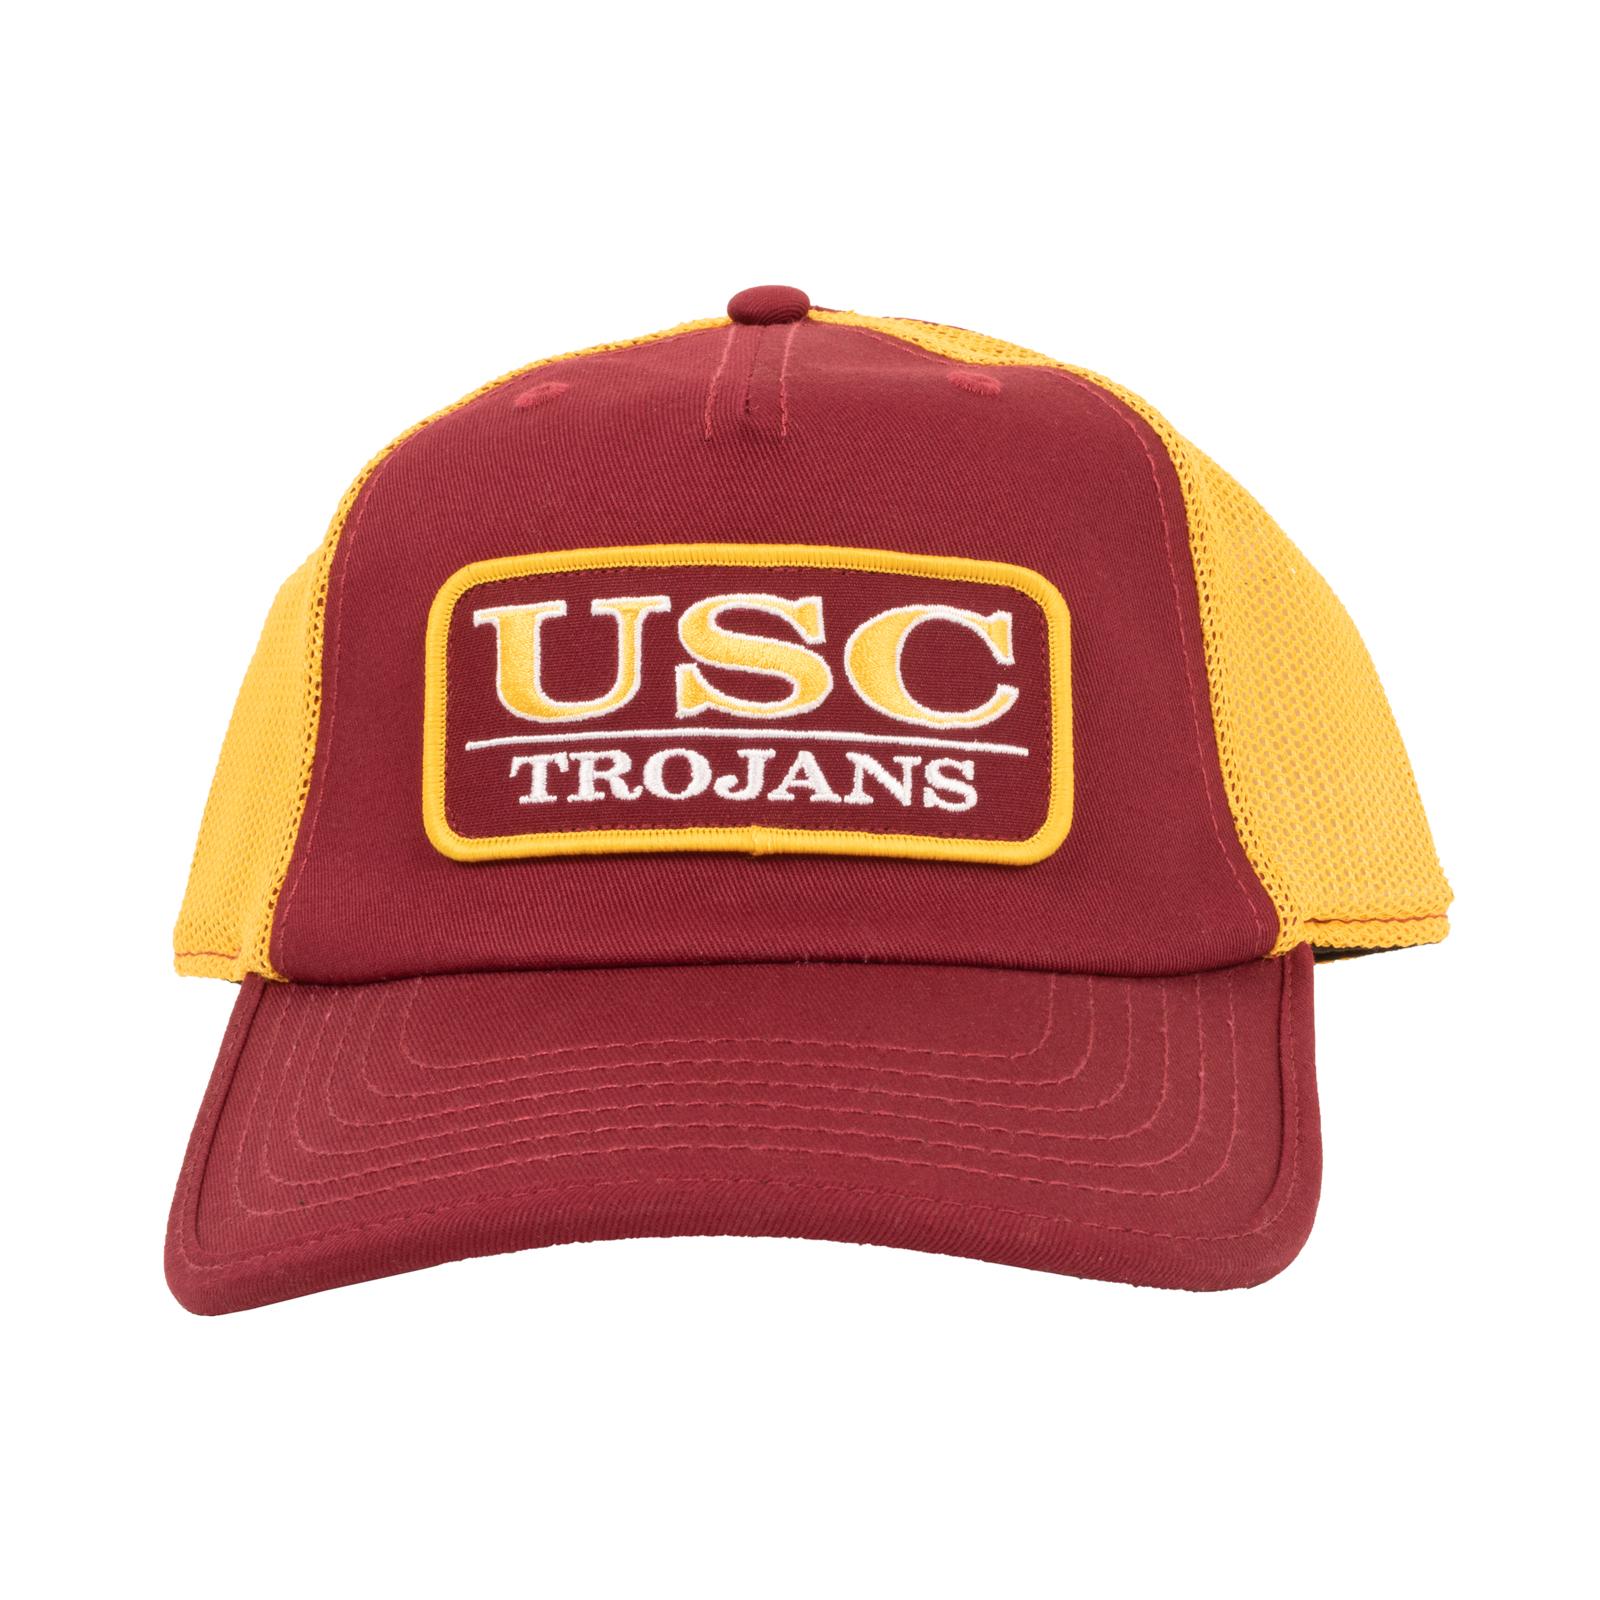 USC Trojans Two Tone Traverse Adjustable Hat SP20 Cardinal image01